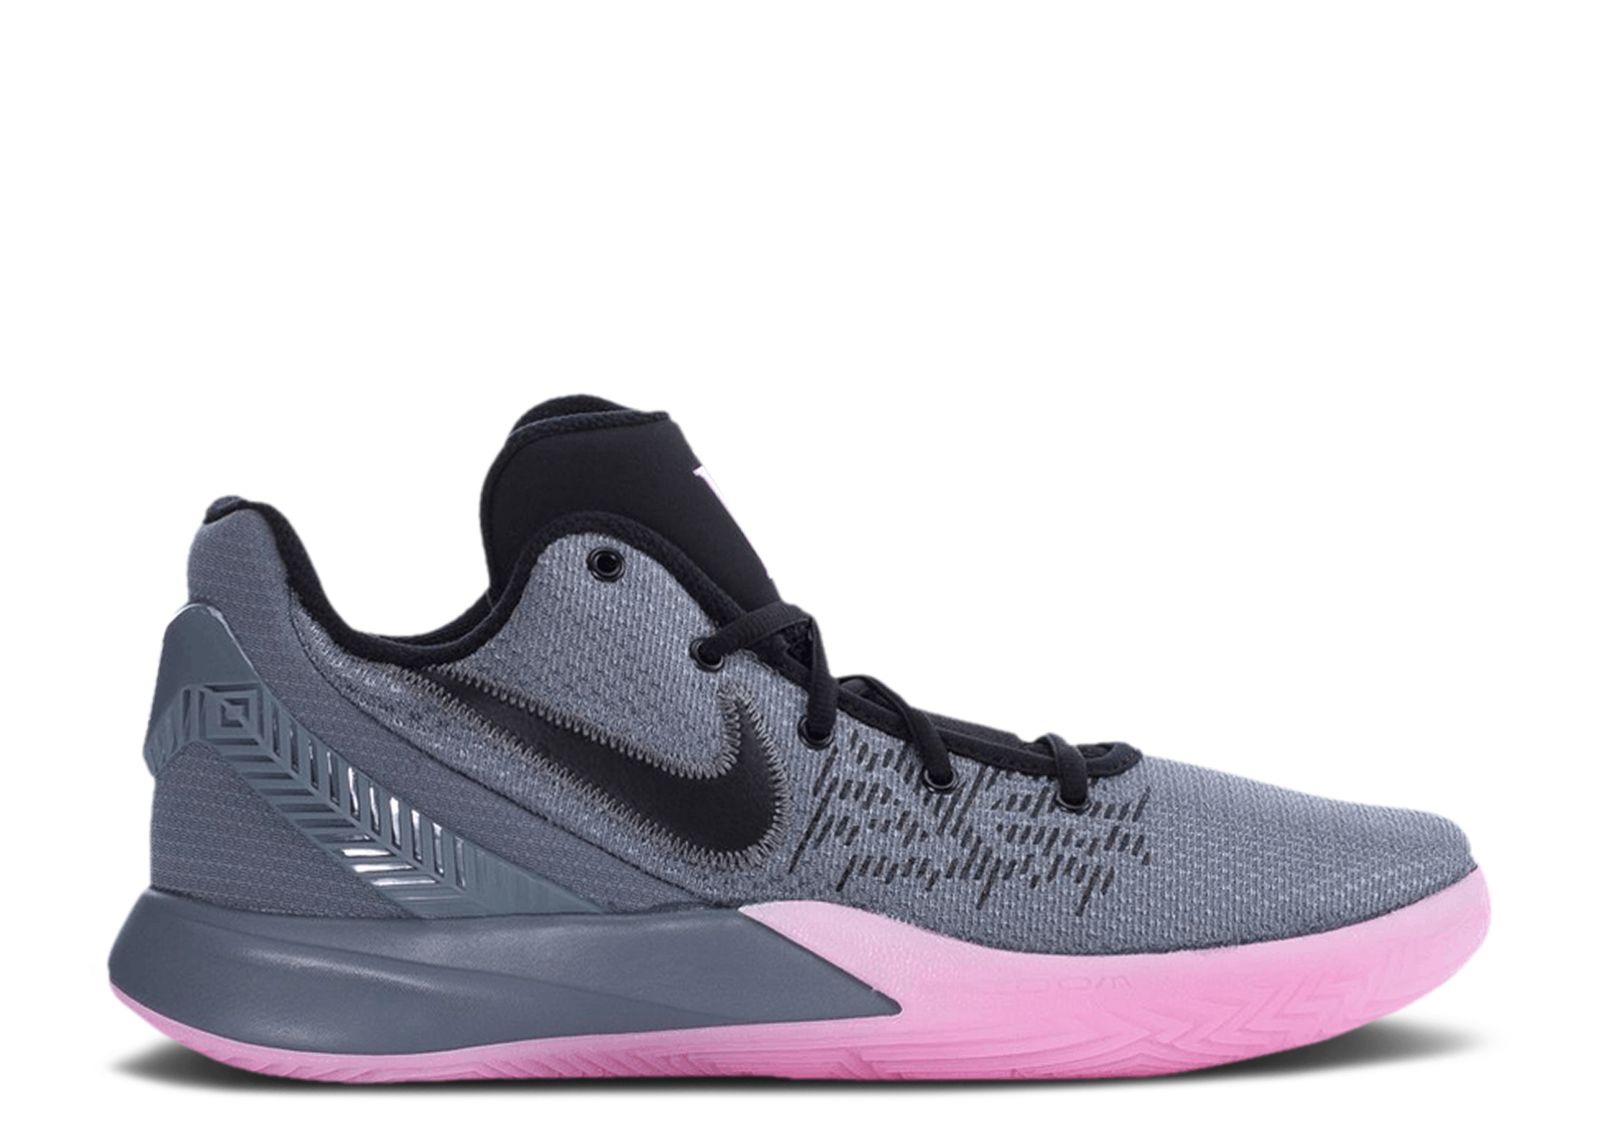 diferente a Validación pasar por alto Kyrie Flytrap 2 'Cool Grey' - Nike - AO4436 006 - cool grey/black/pink foam  | Flight Club